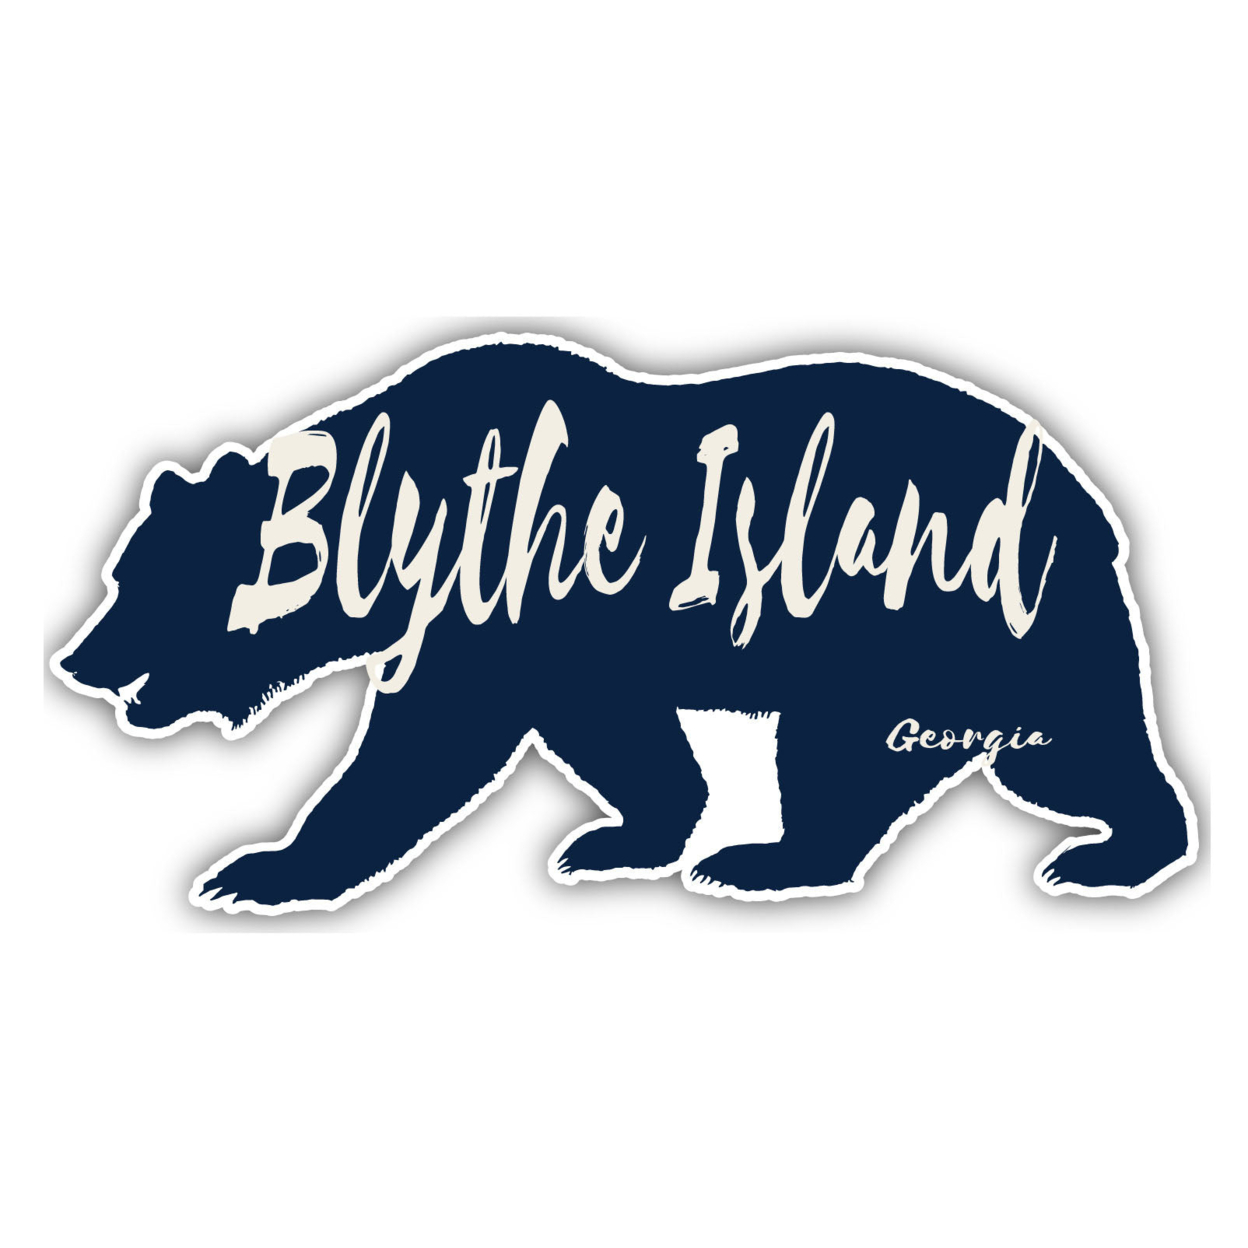 Blythe Island Georgia Souvenir Decorative Stickers (Choose Theme And Size) - Single Unit, 2-Inch, Camp Life